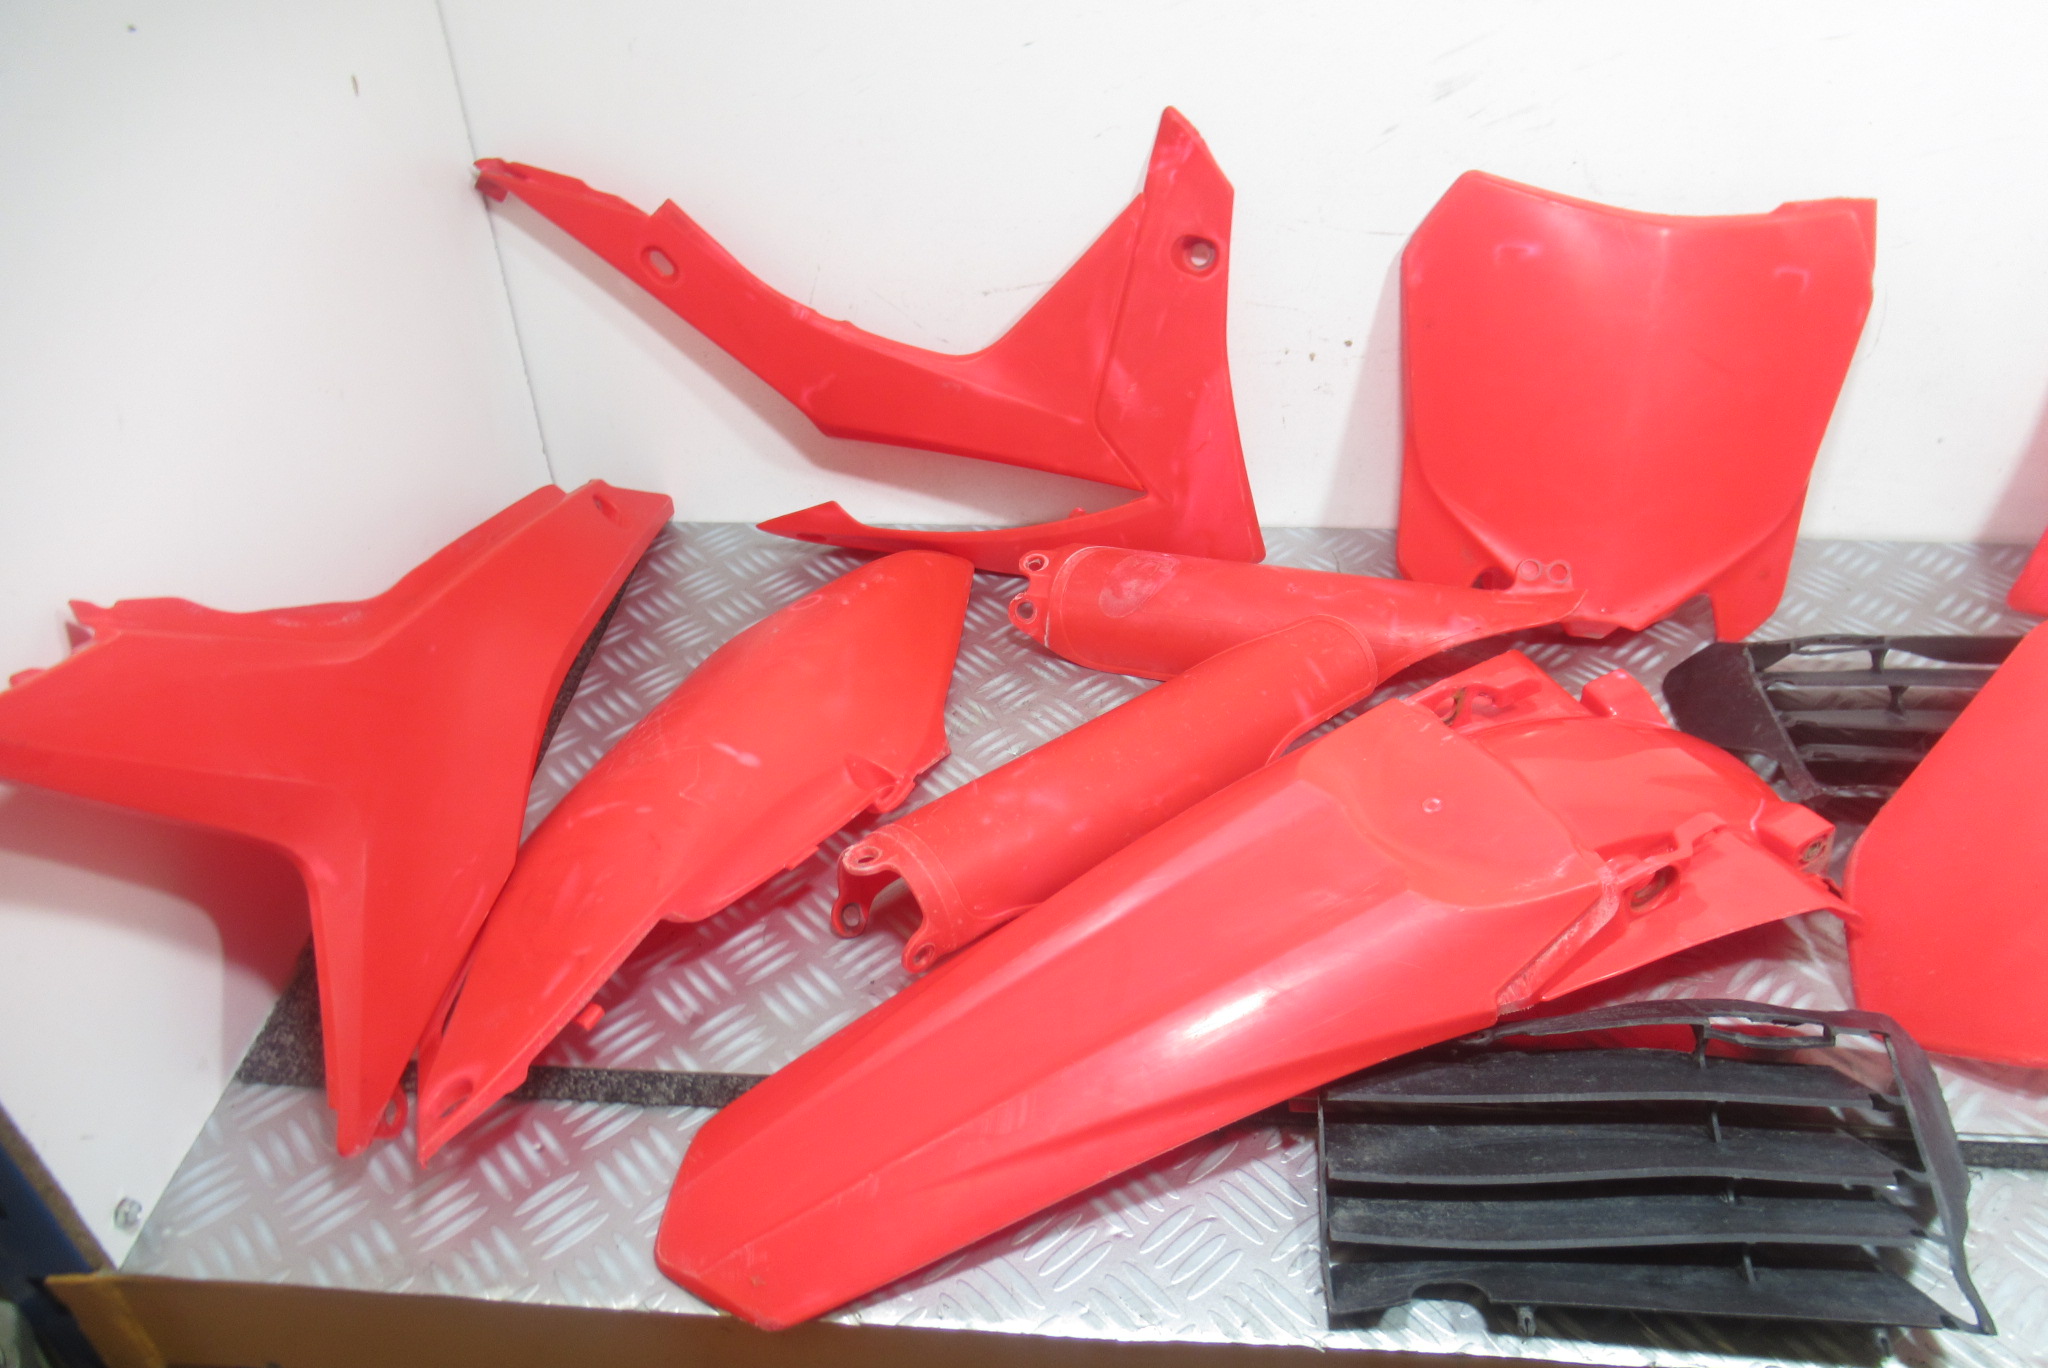 Kit carenage Honda CRF 450 4t